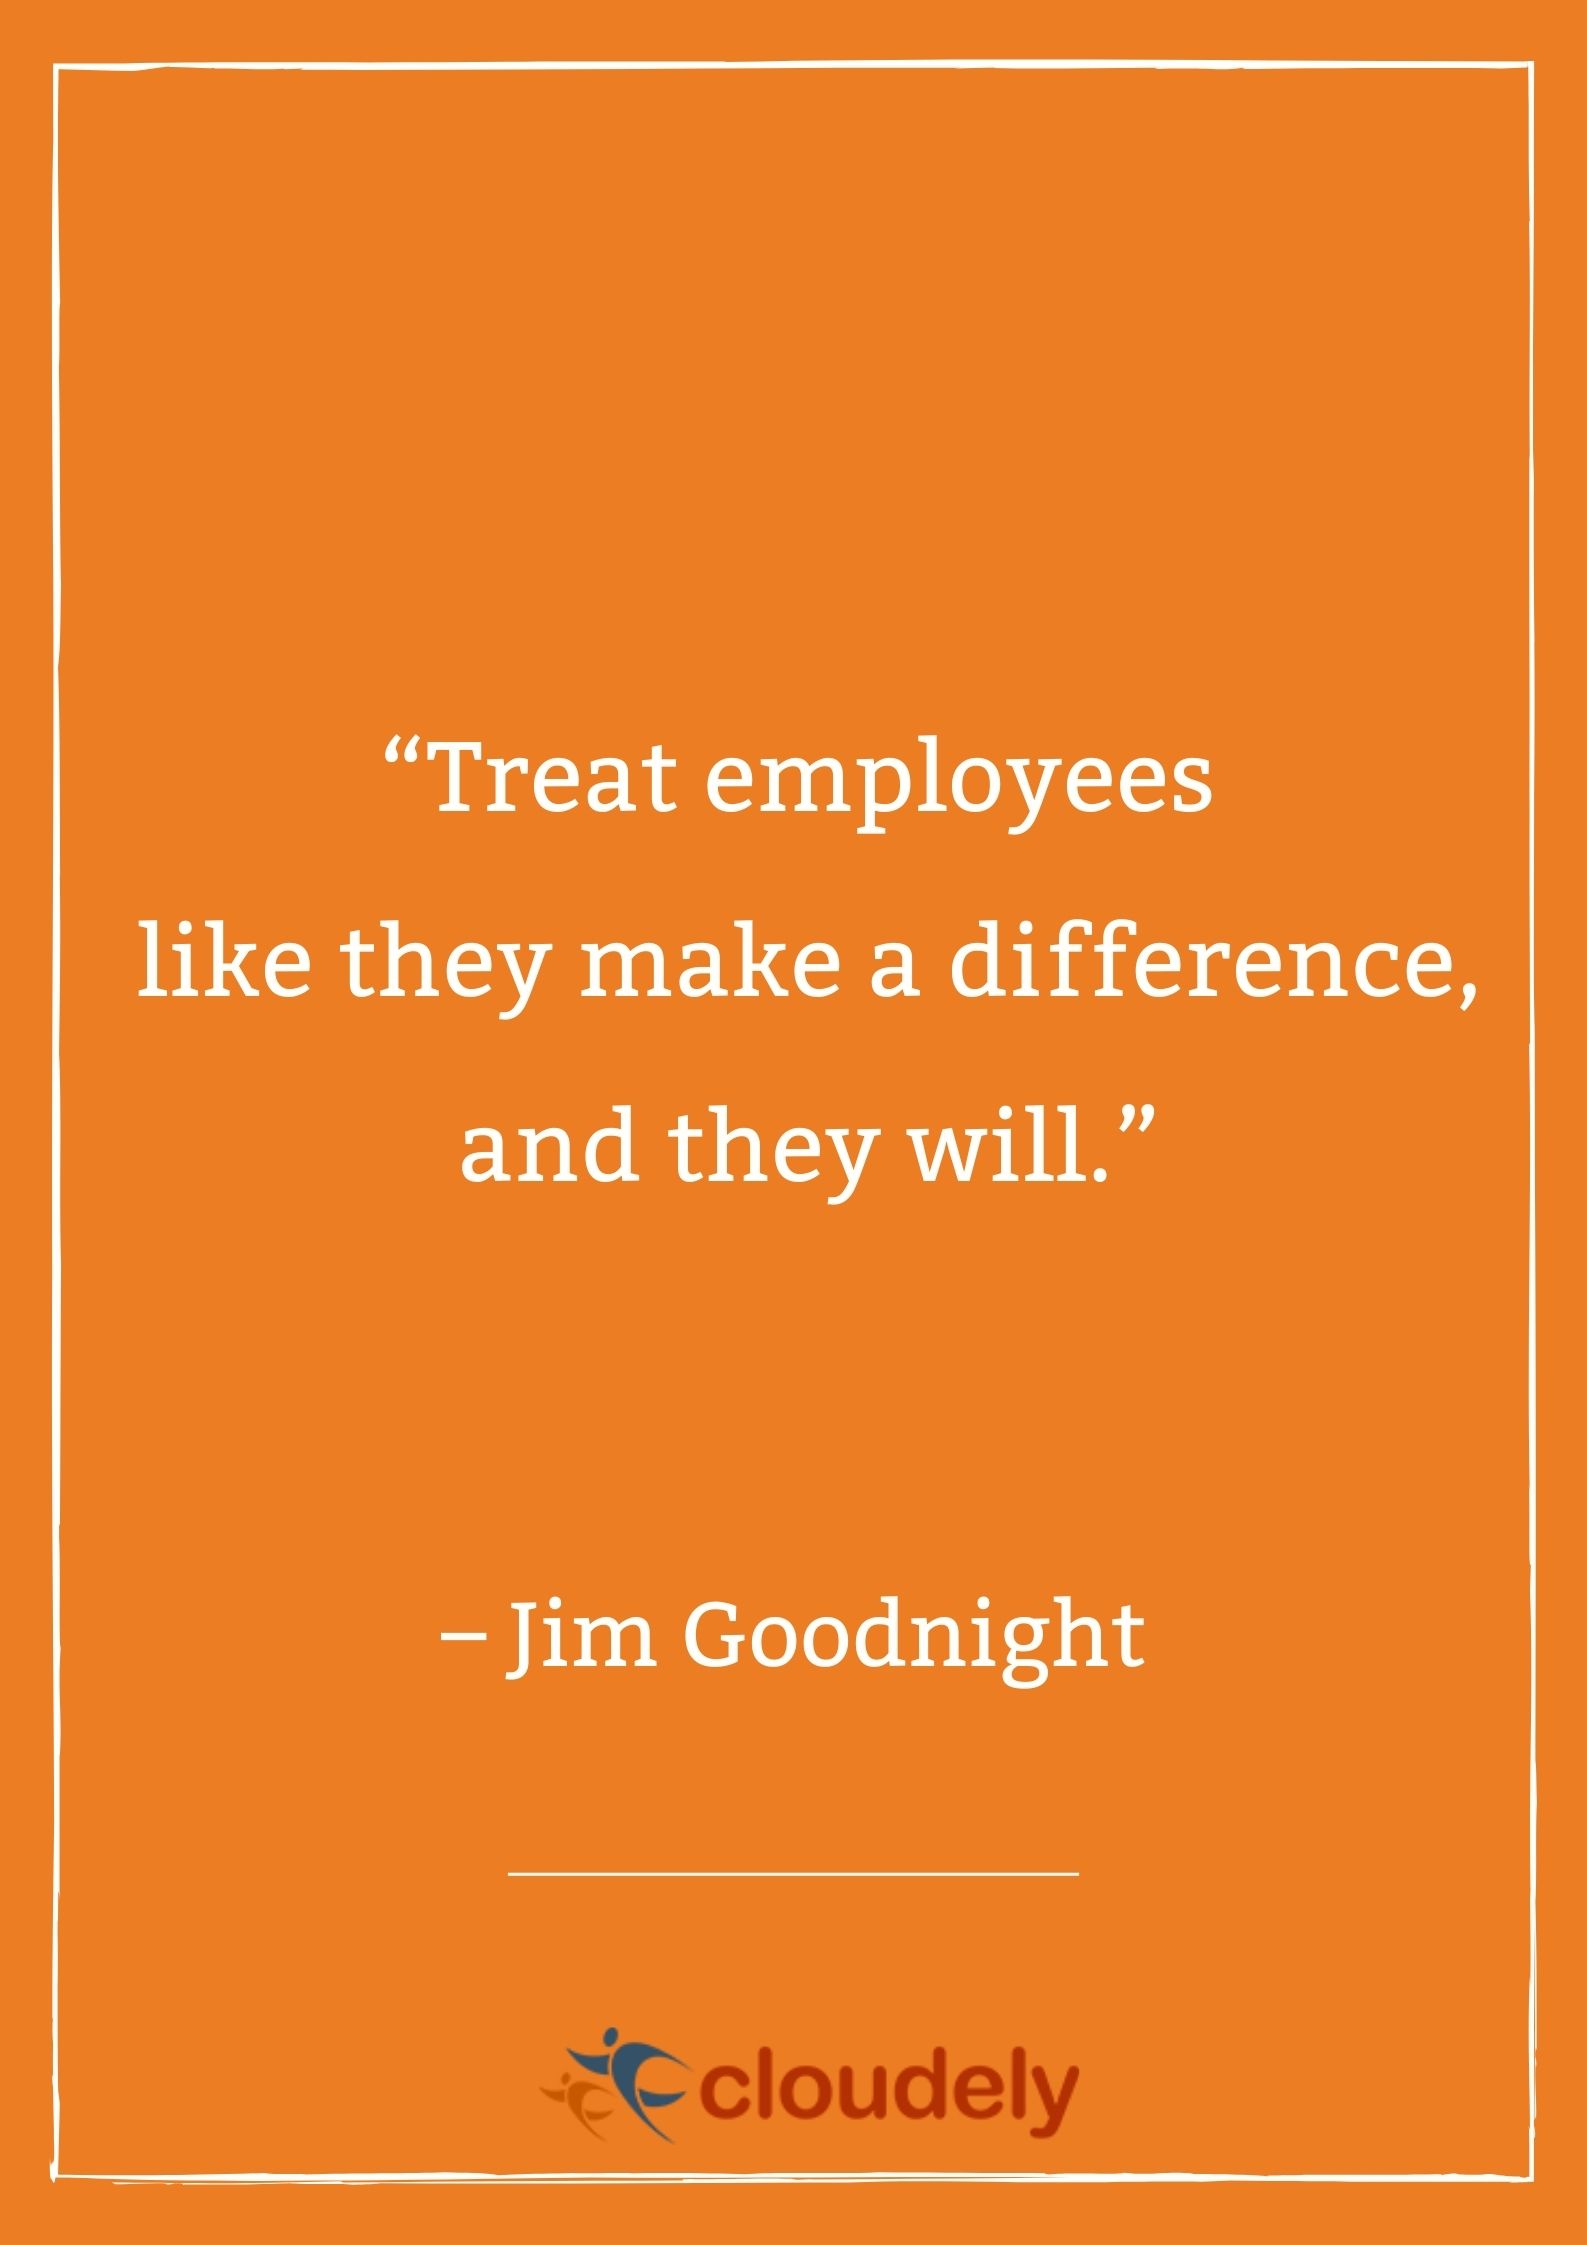 Jim Good Night quote